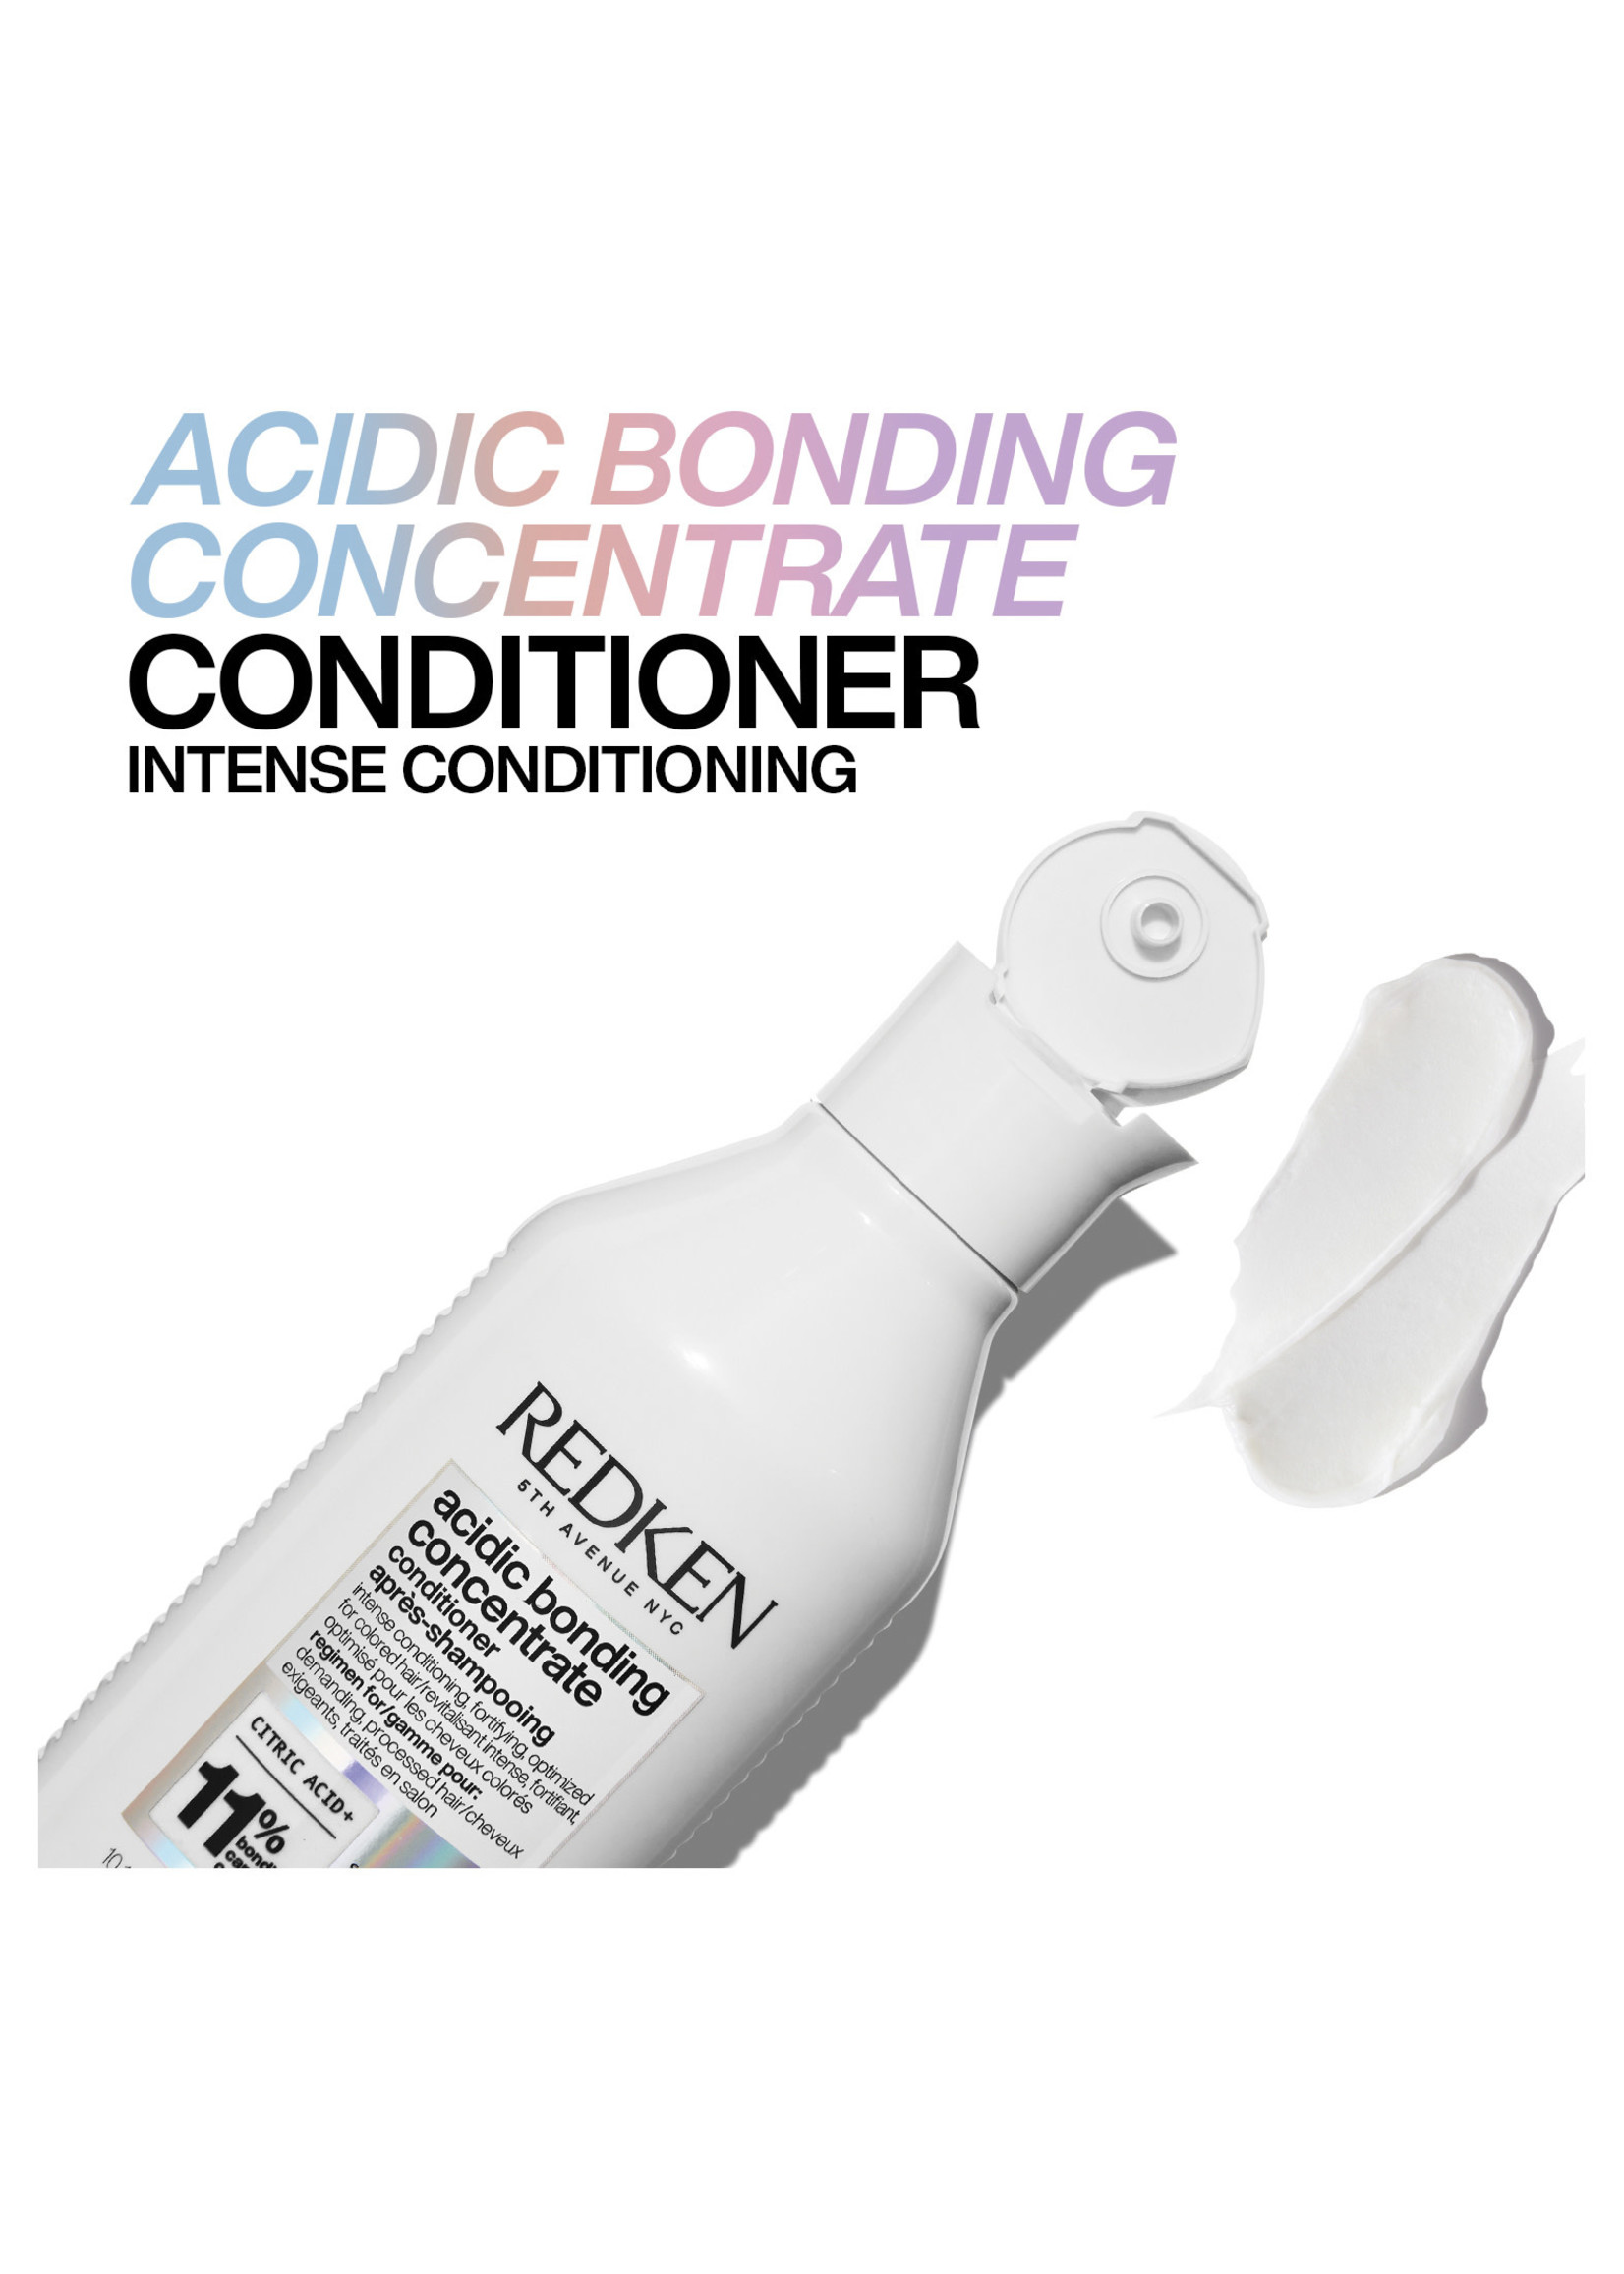 Redken Redken Acidic Bonding Concentrate Conditioner 300ml